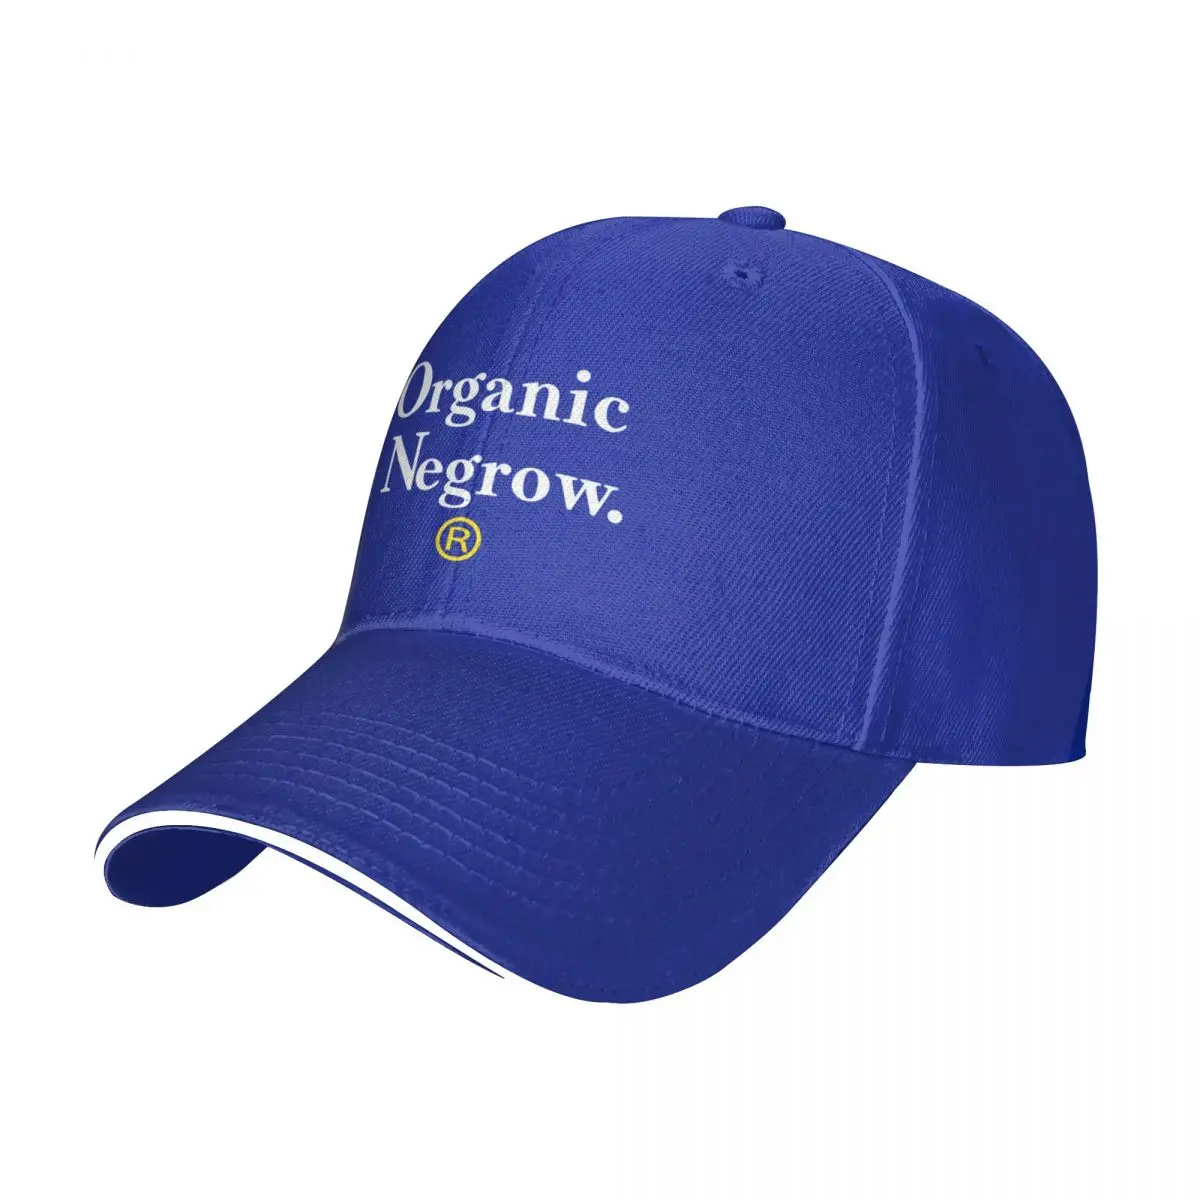 

New Organic Negrow Apparel - Organic Negrow Clothing - Organic Negrow Gifts and Merchandise v.1 Baseball Cap Hat Beach